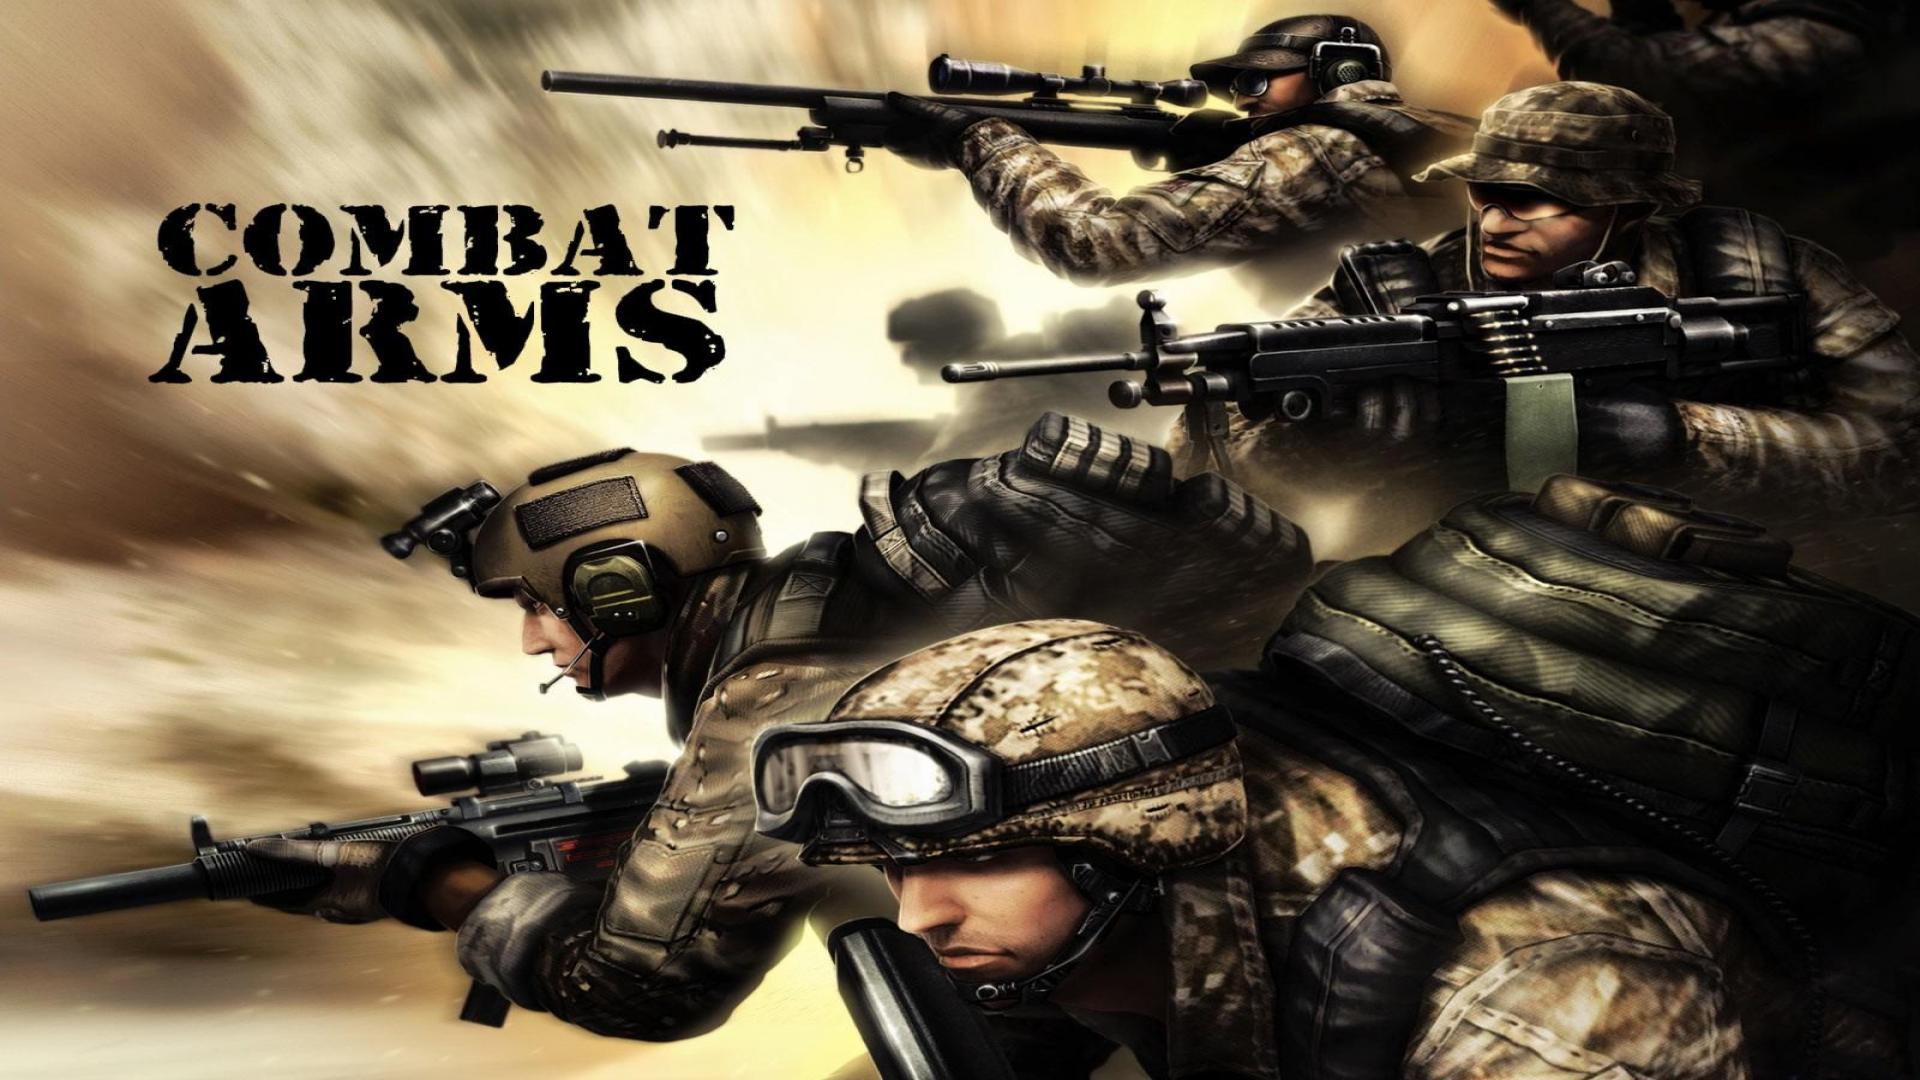 Кс армс гс. Комбат Армс. Combat Arms геймплей. F2000 комбат Армс. Combat Arms: Reloaded.